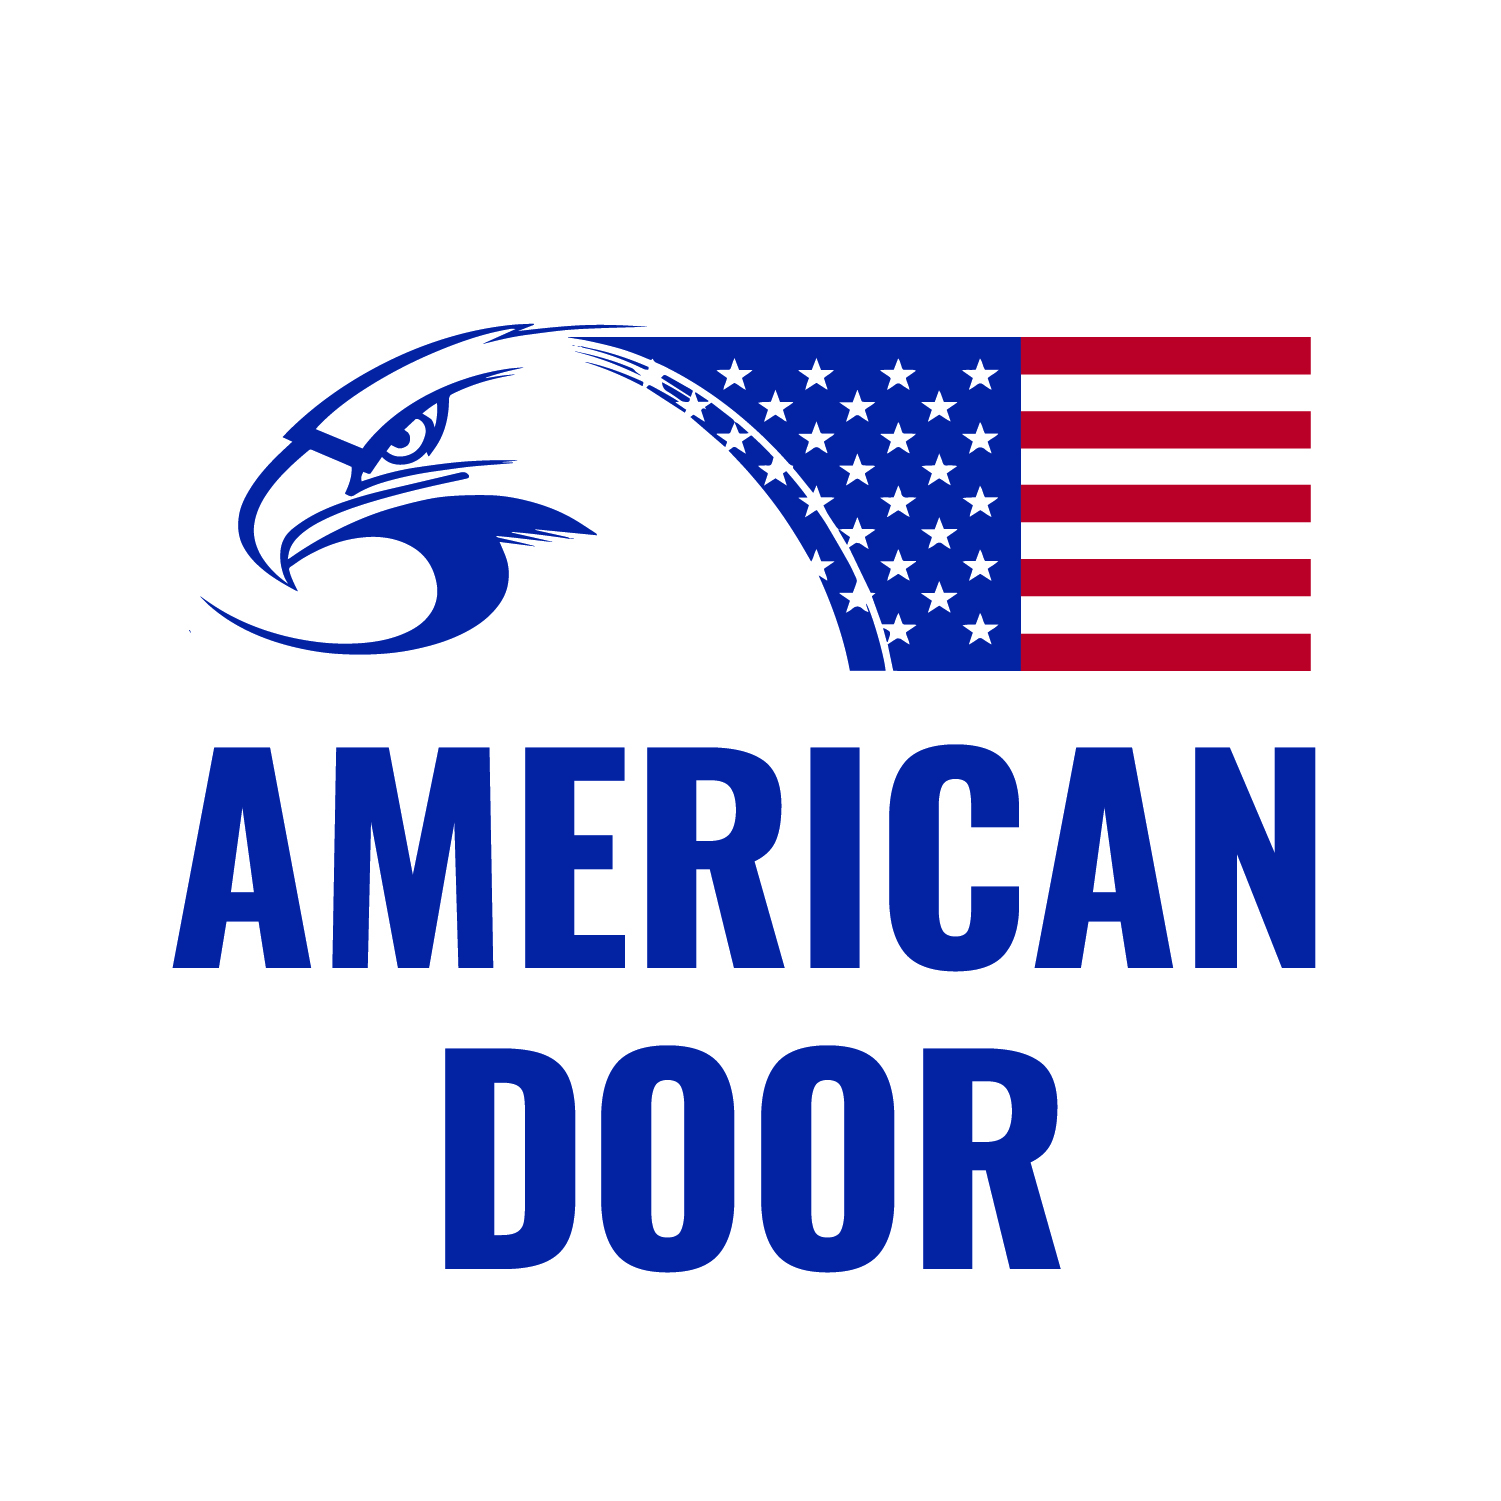 (c) Americandoor.com